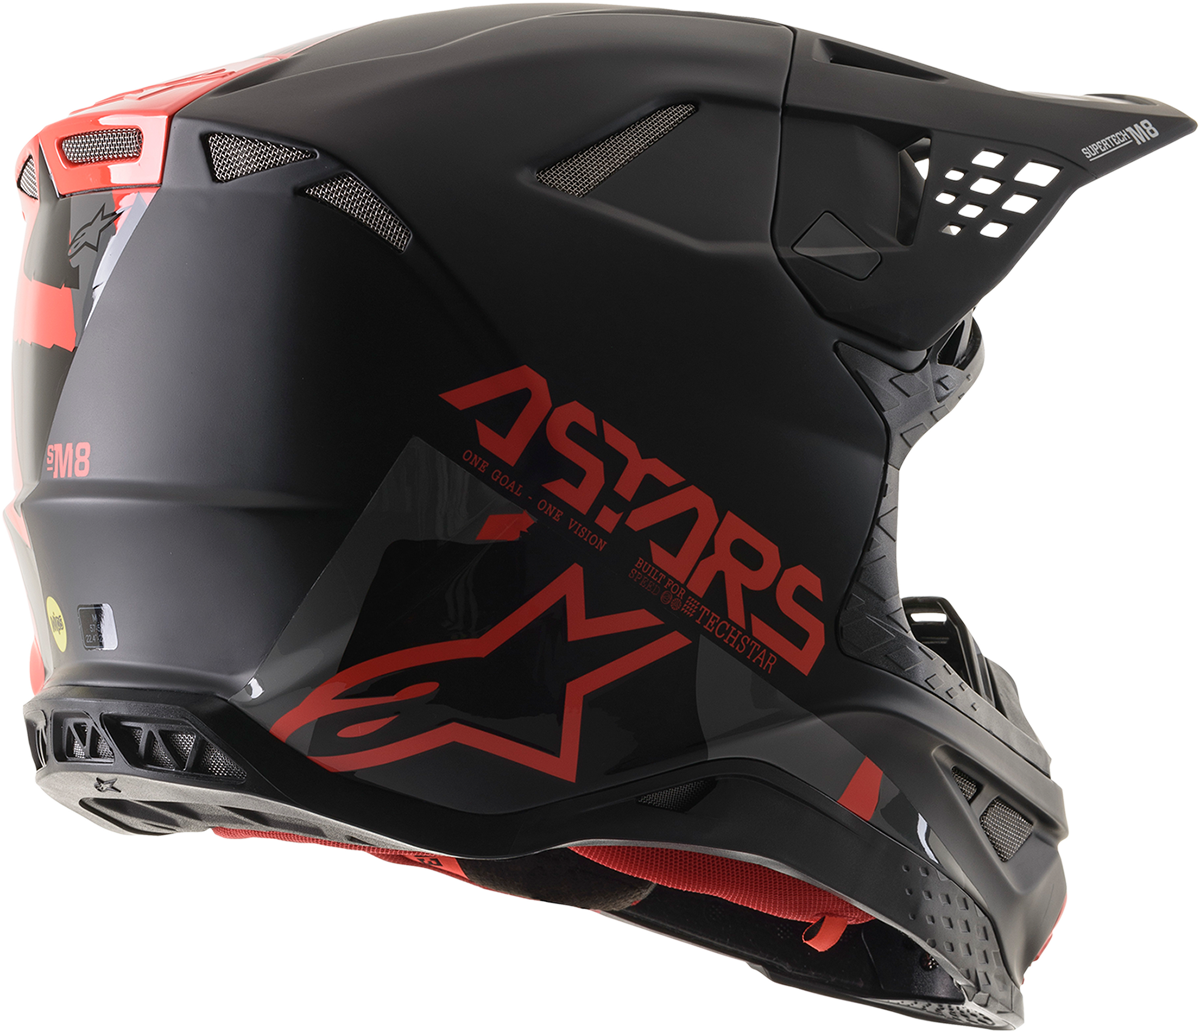 ALPINESTARS Supertech M8 Helmet - Echo - MIPS® - Black/Red/Gloss - Large 8302621-1116-LG